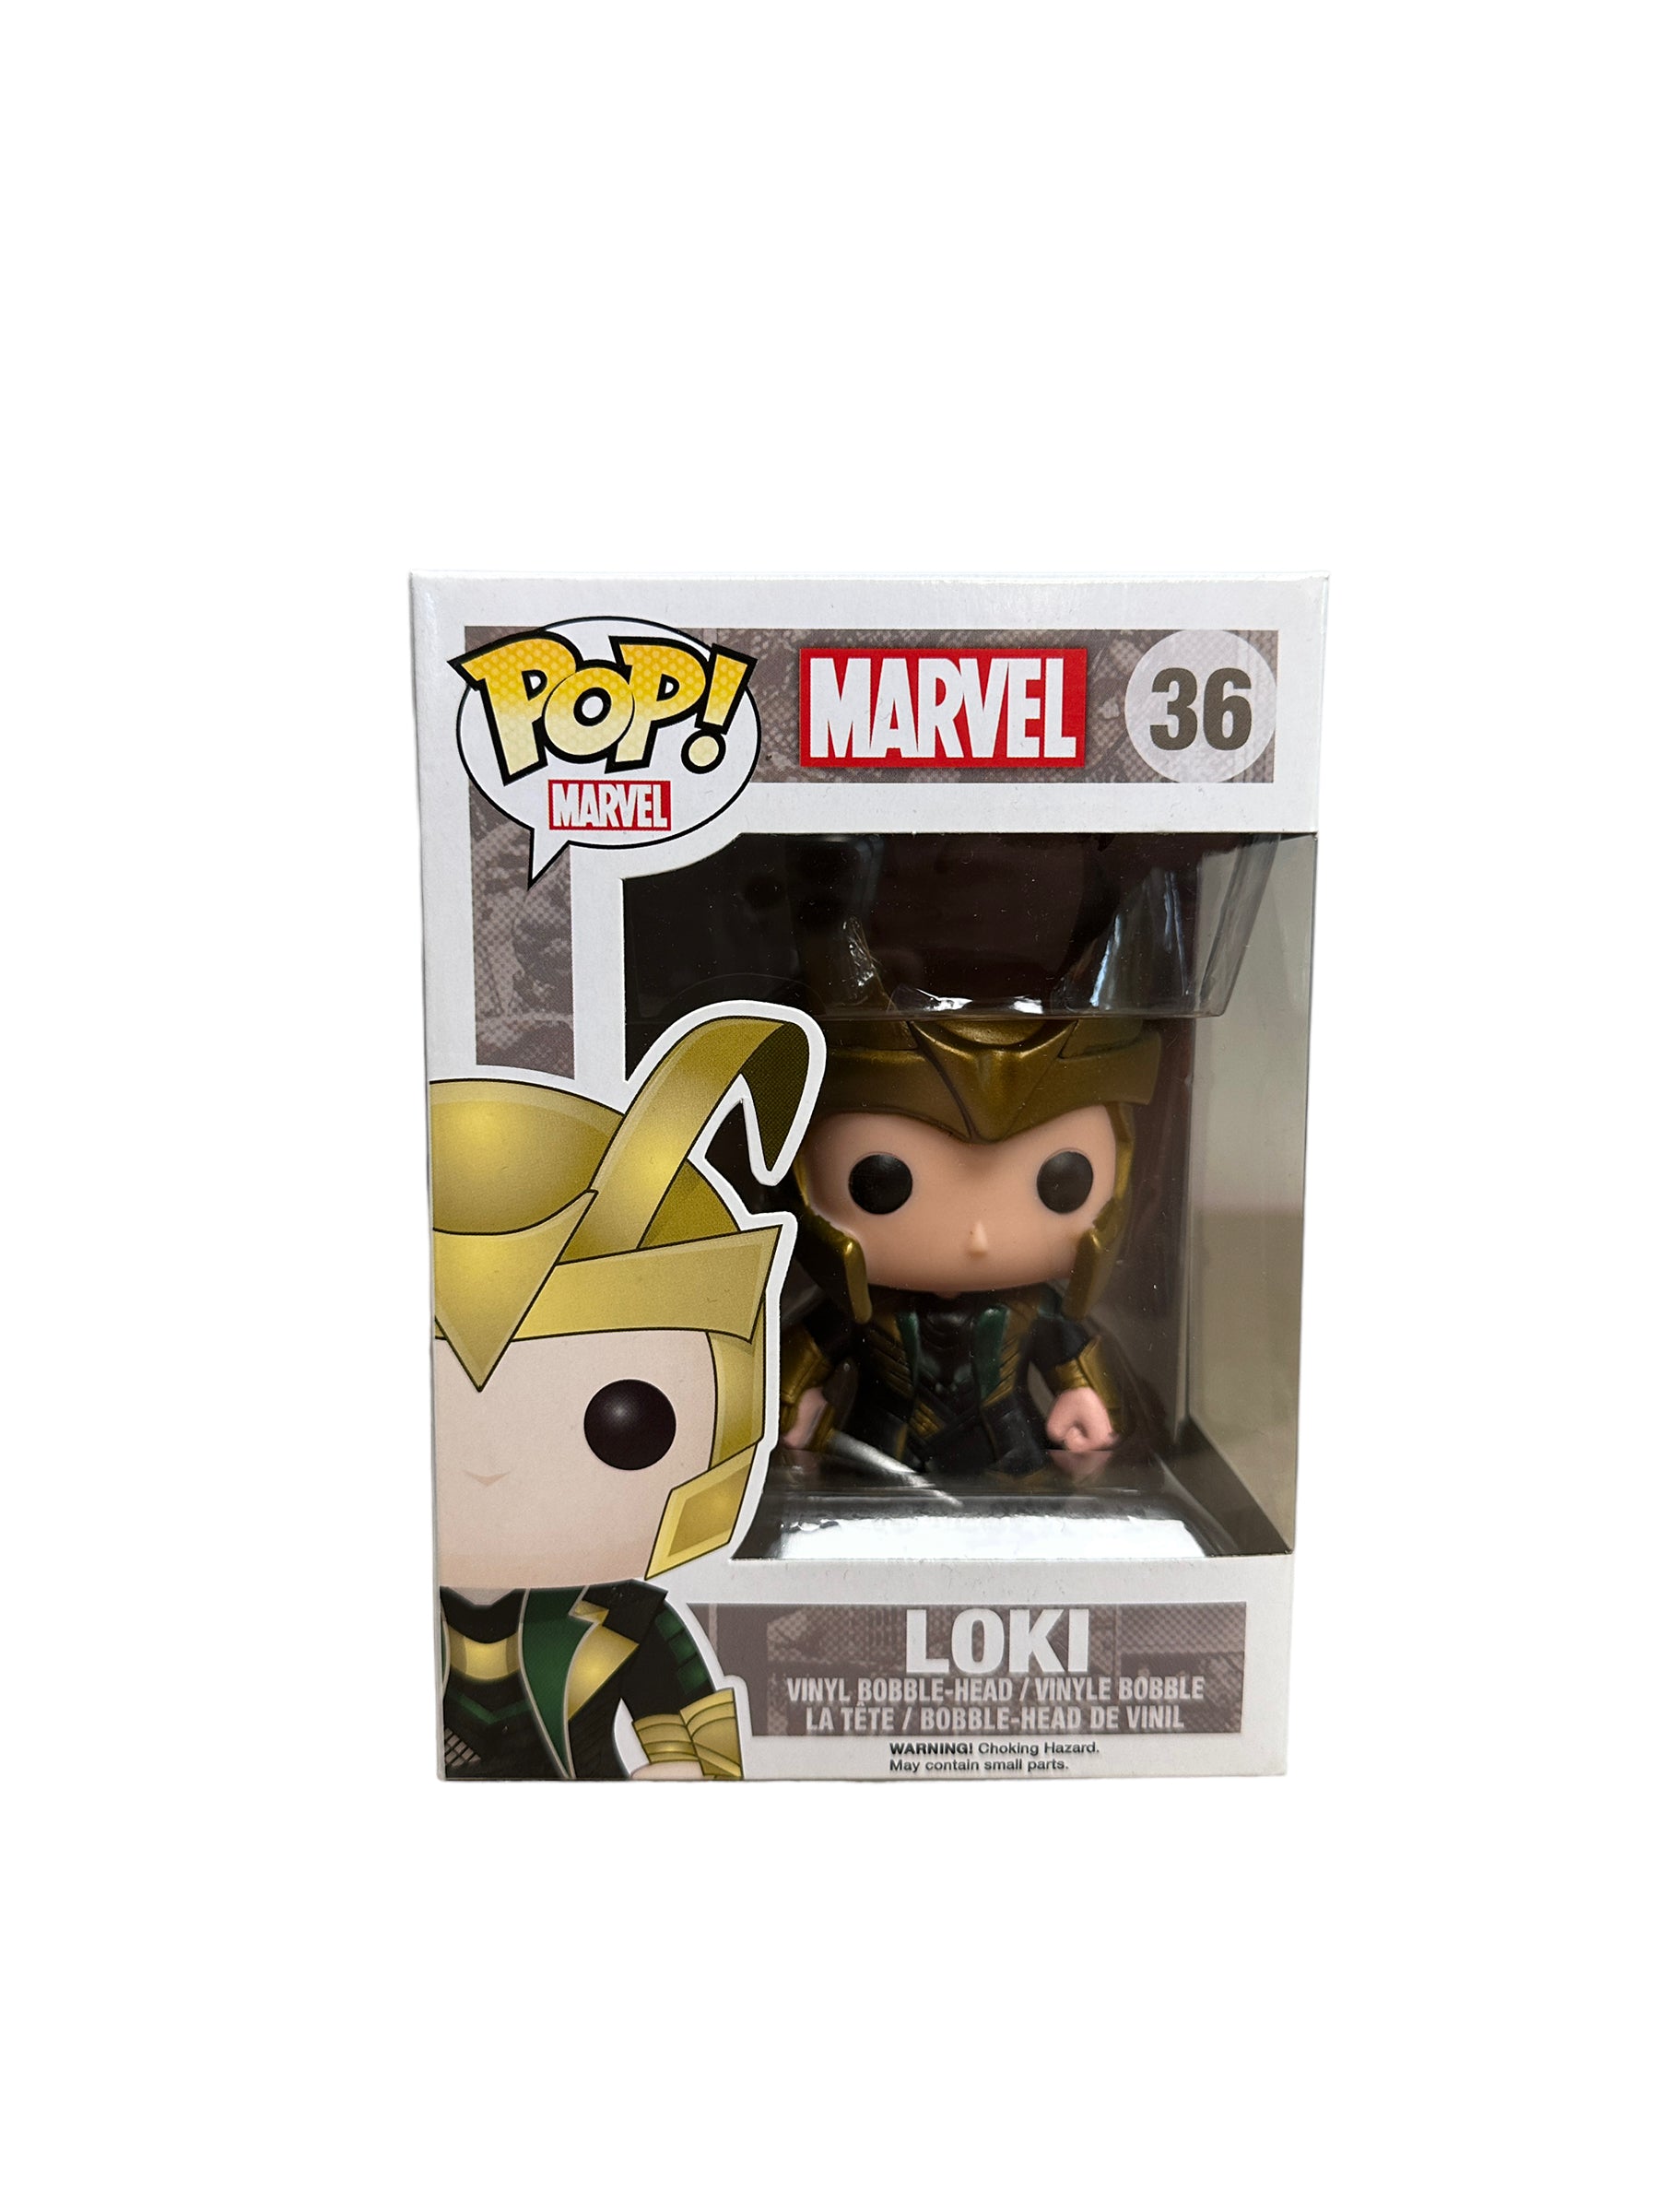 Loki #36 Funko Pop! - Marvel - 2015 Pop! - Condition 9/10